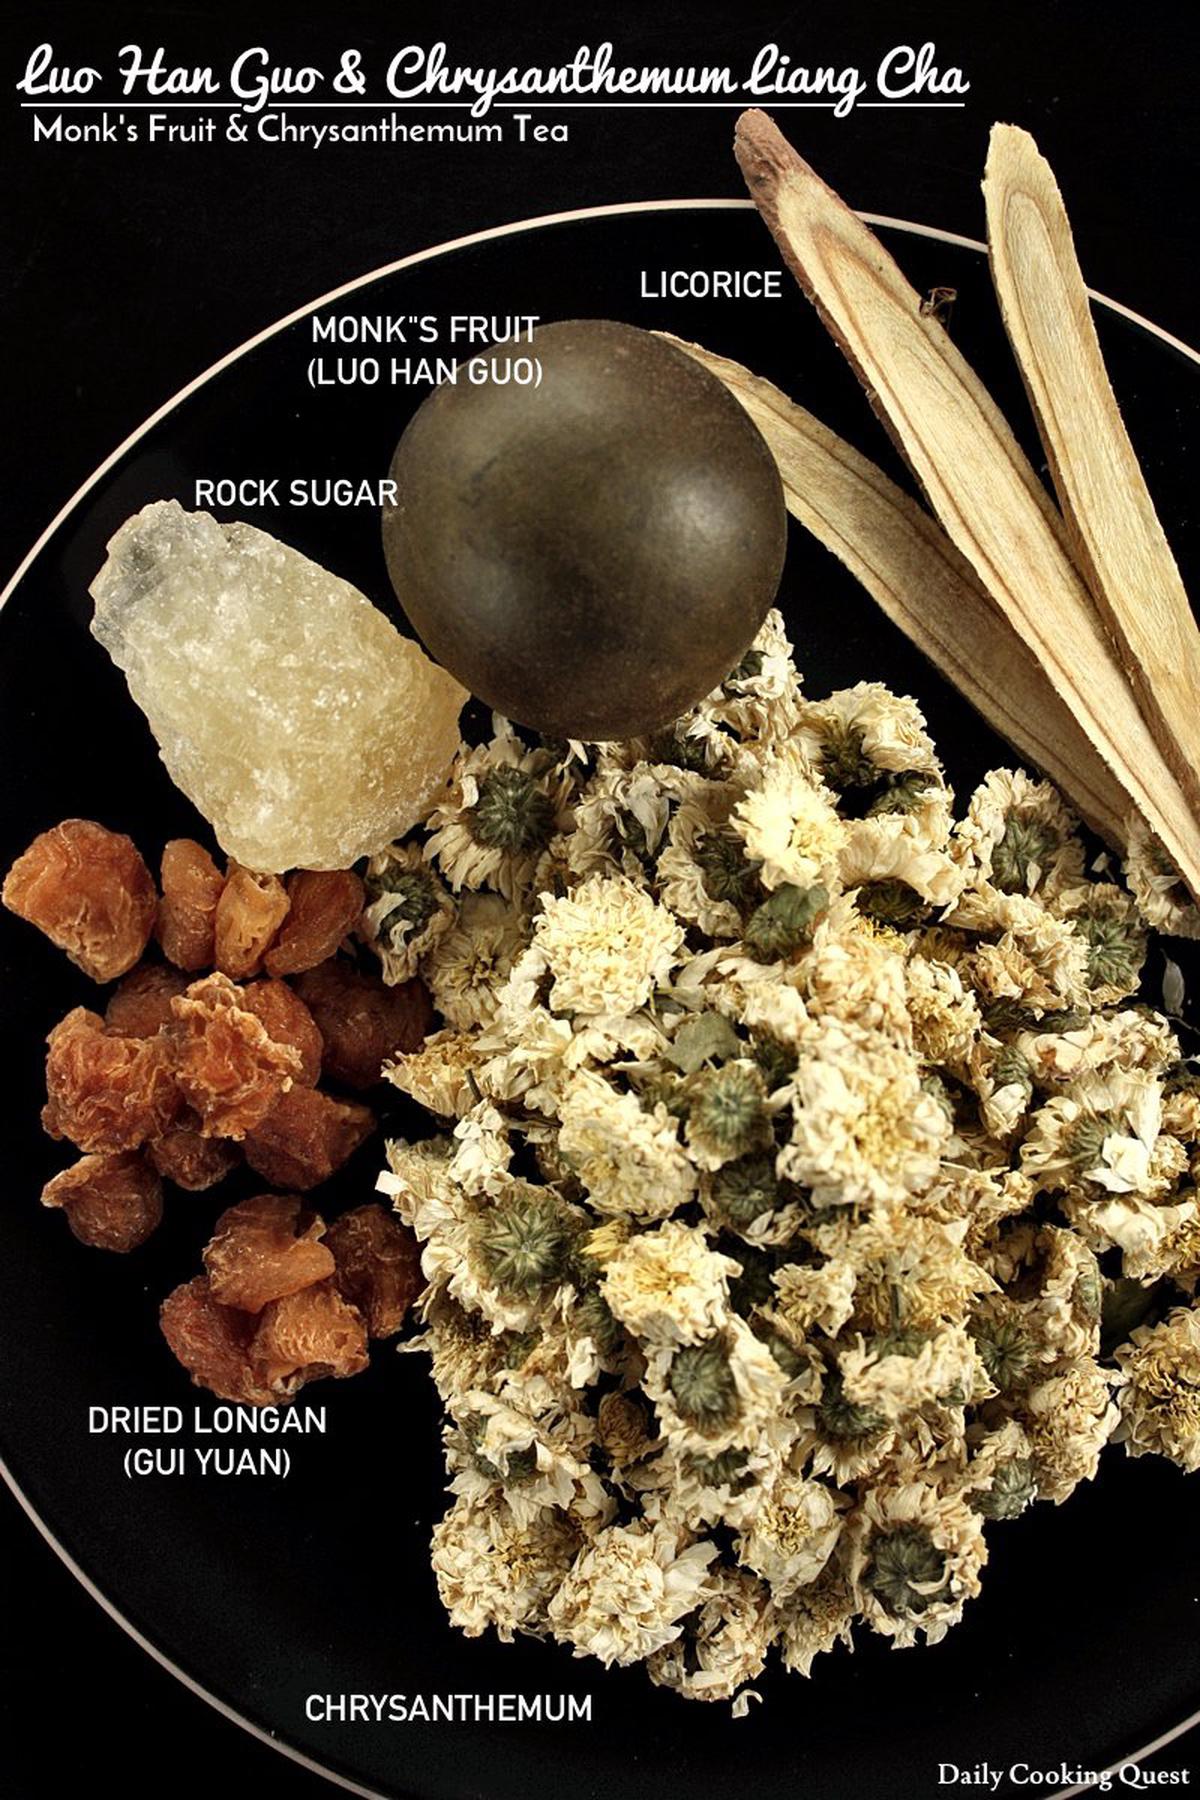 Luo Han Guo and Chrysanthemum Liang Cha - Monks' Fruit and Chrysanthemum Tea Ingredients